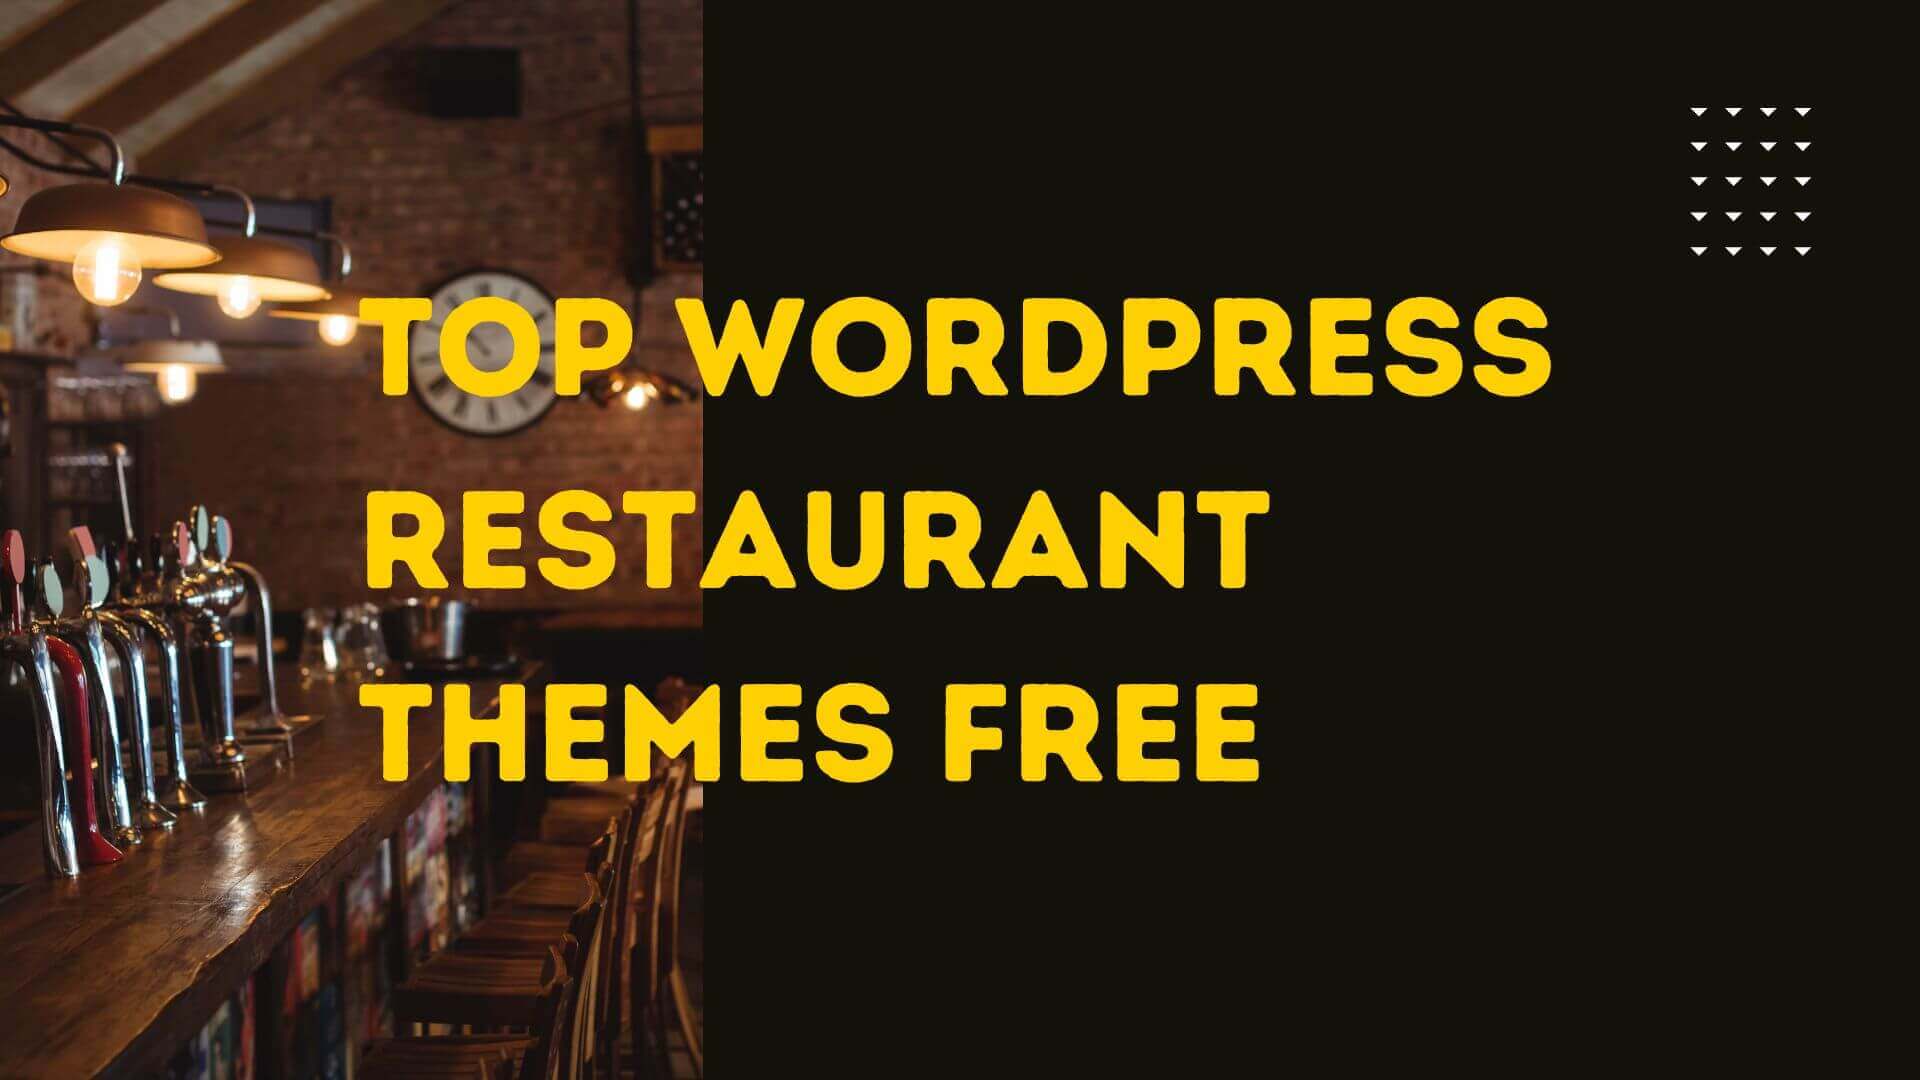 Top Restaurant WordPress Themes Free